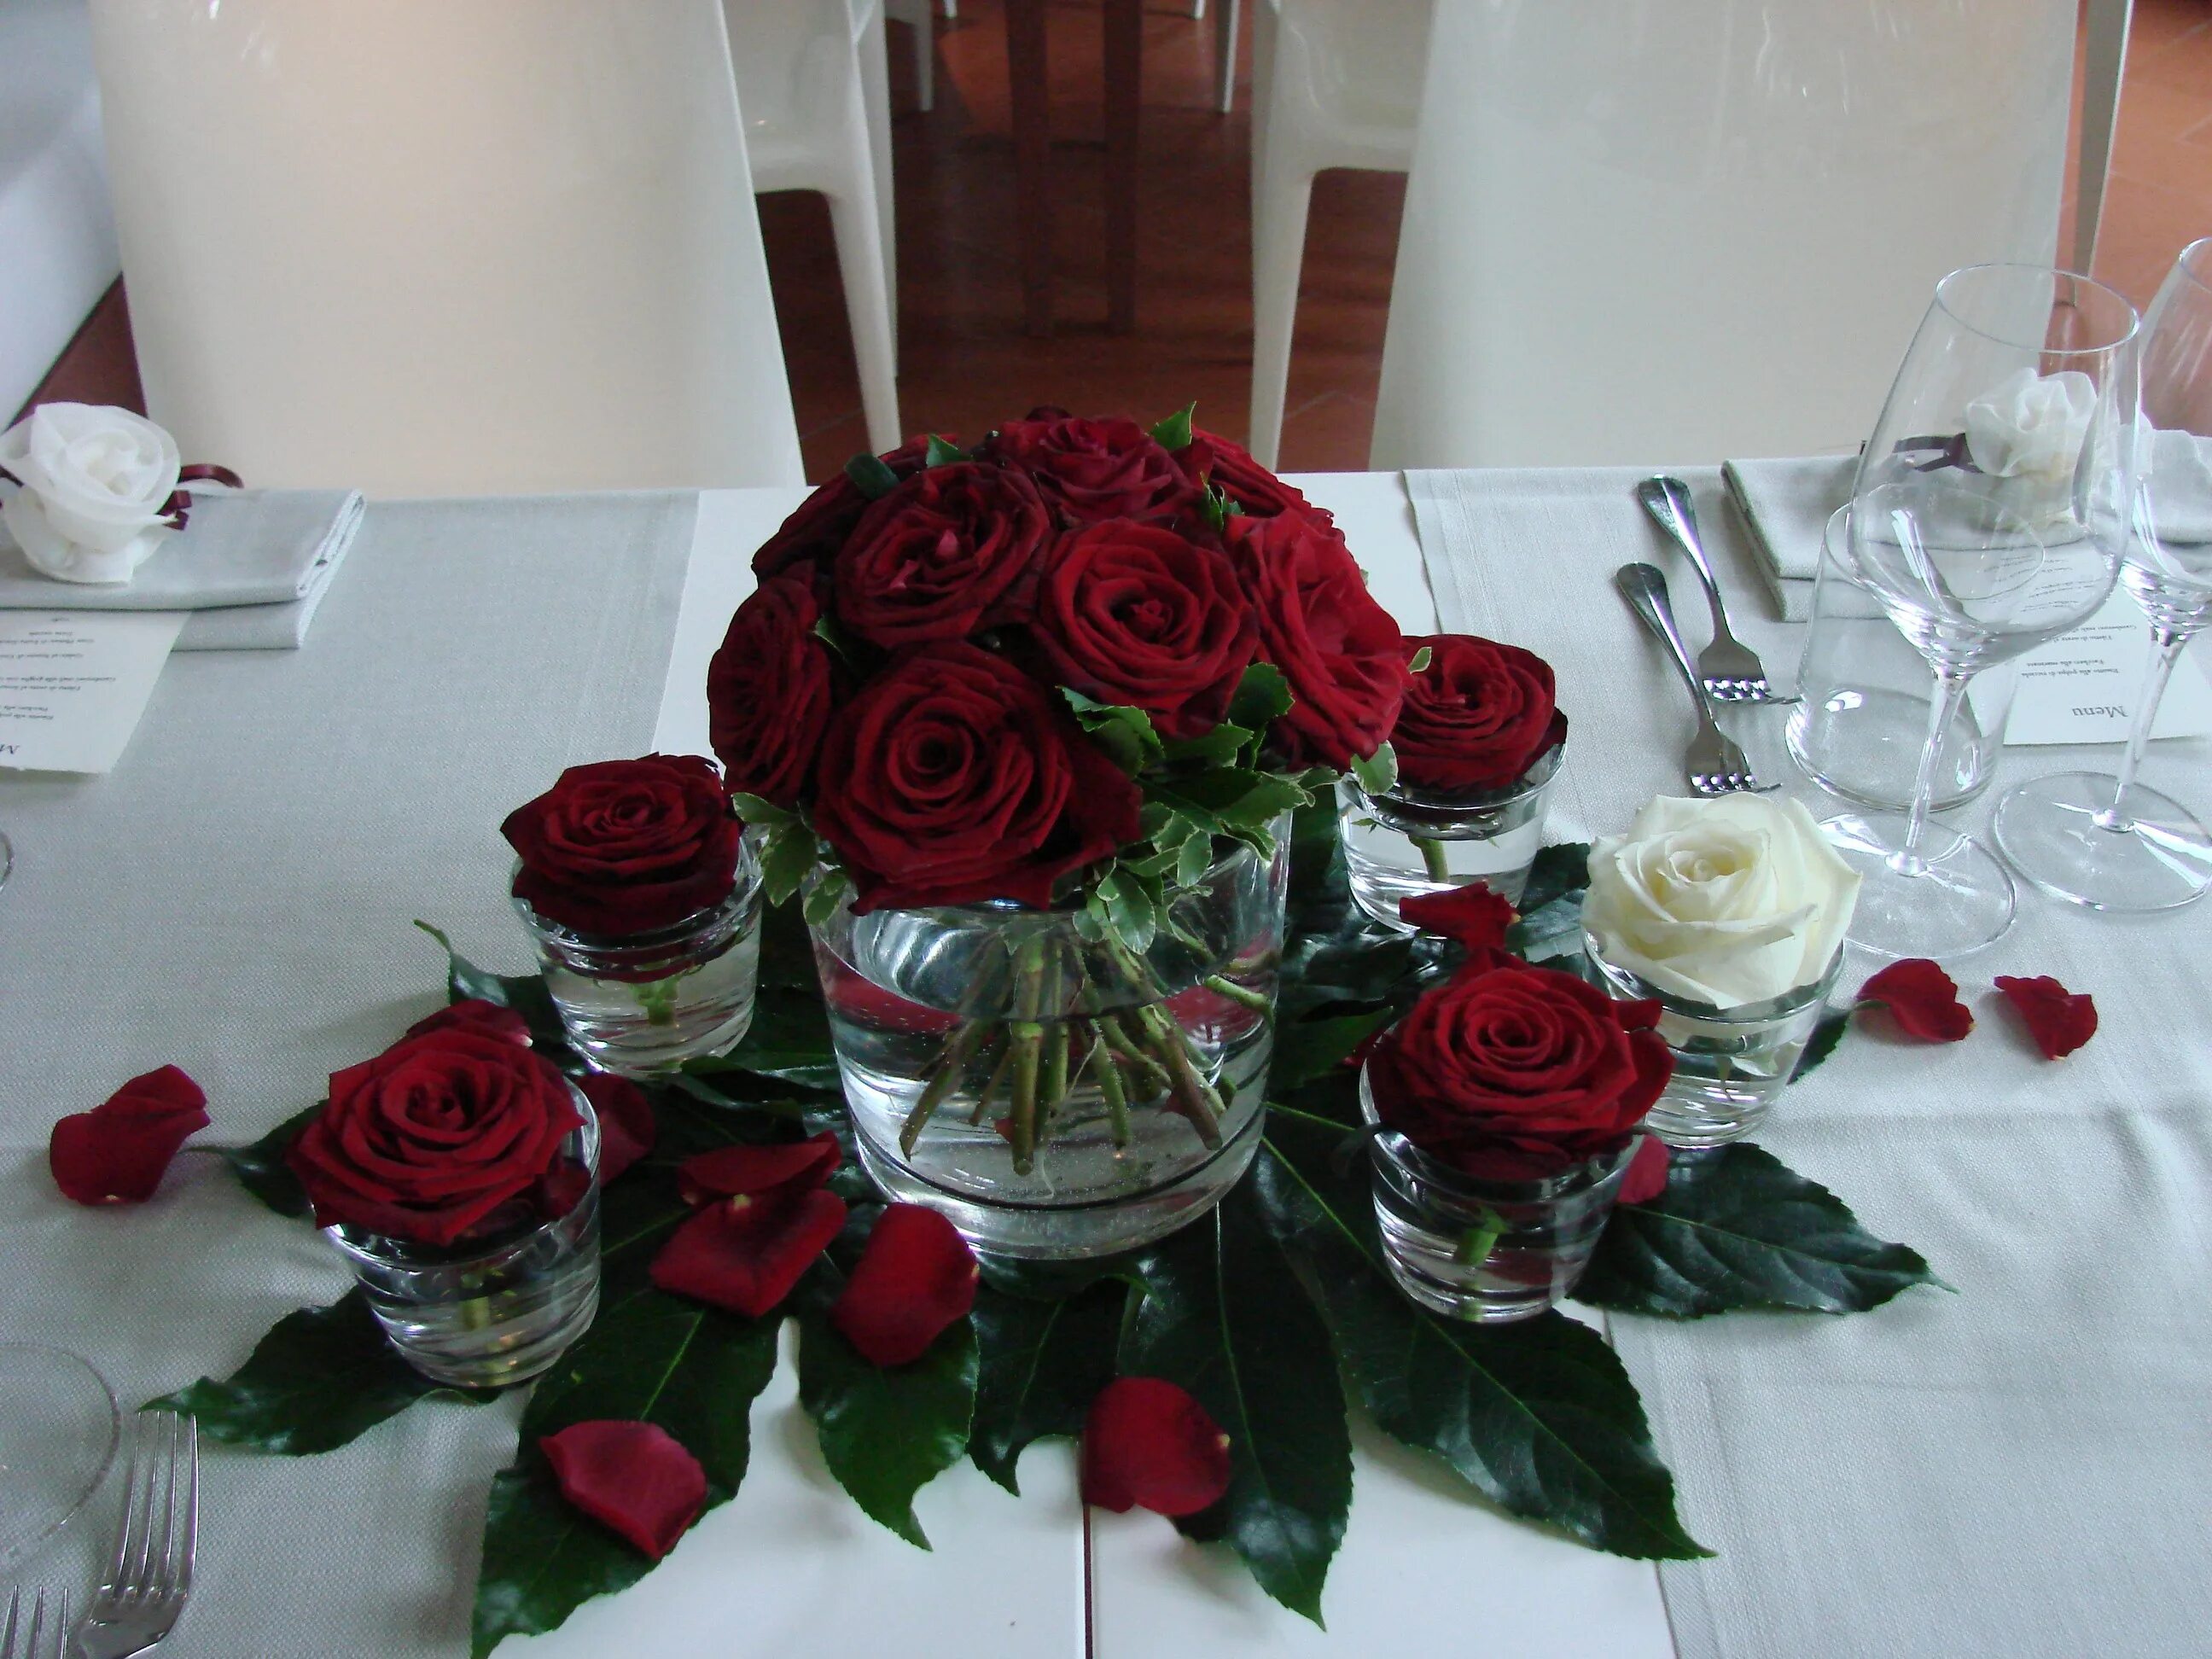 Композиция из цветов на стол. Букет на столе. Цветы на столе букет. Розы на столе.